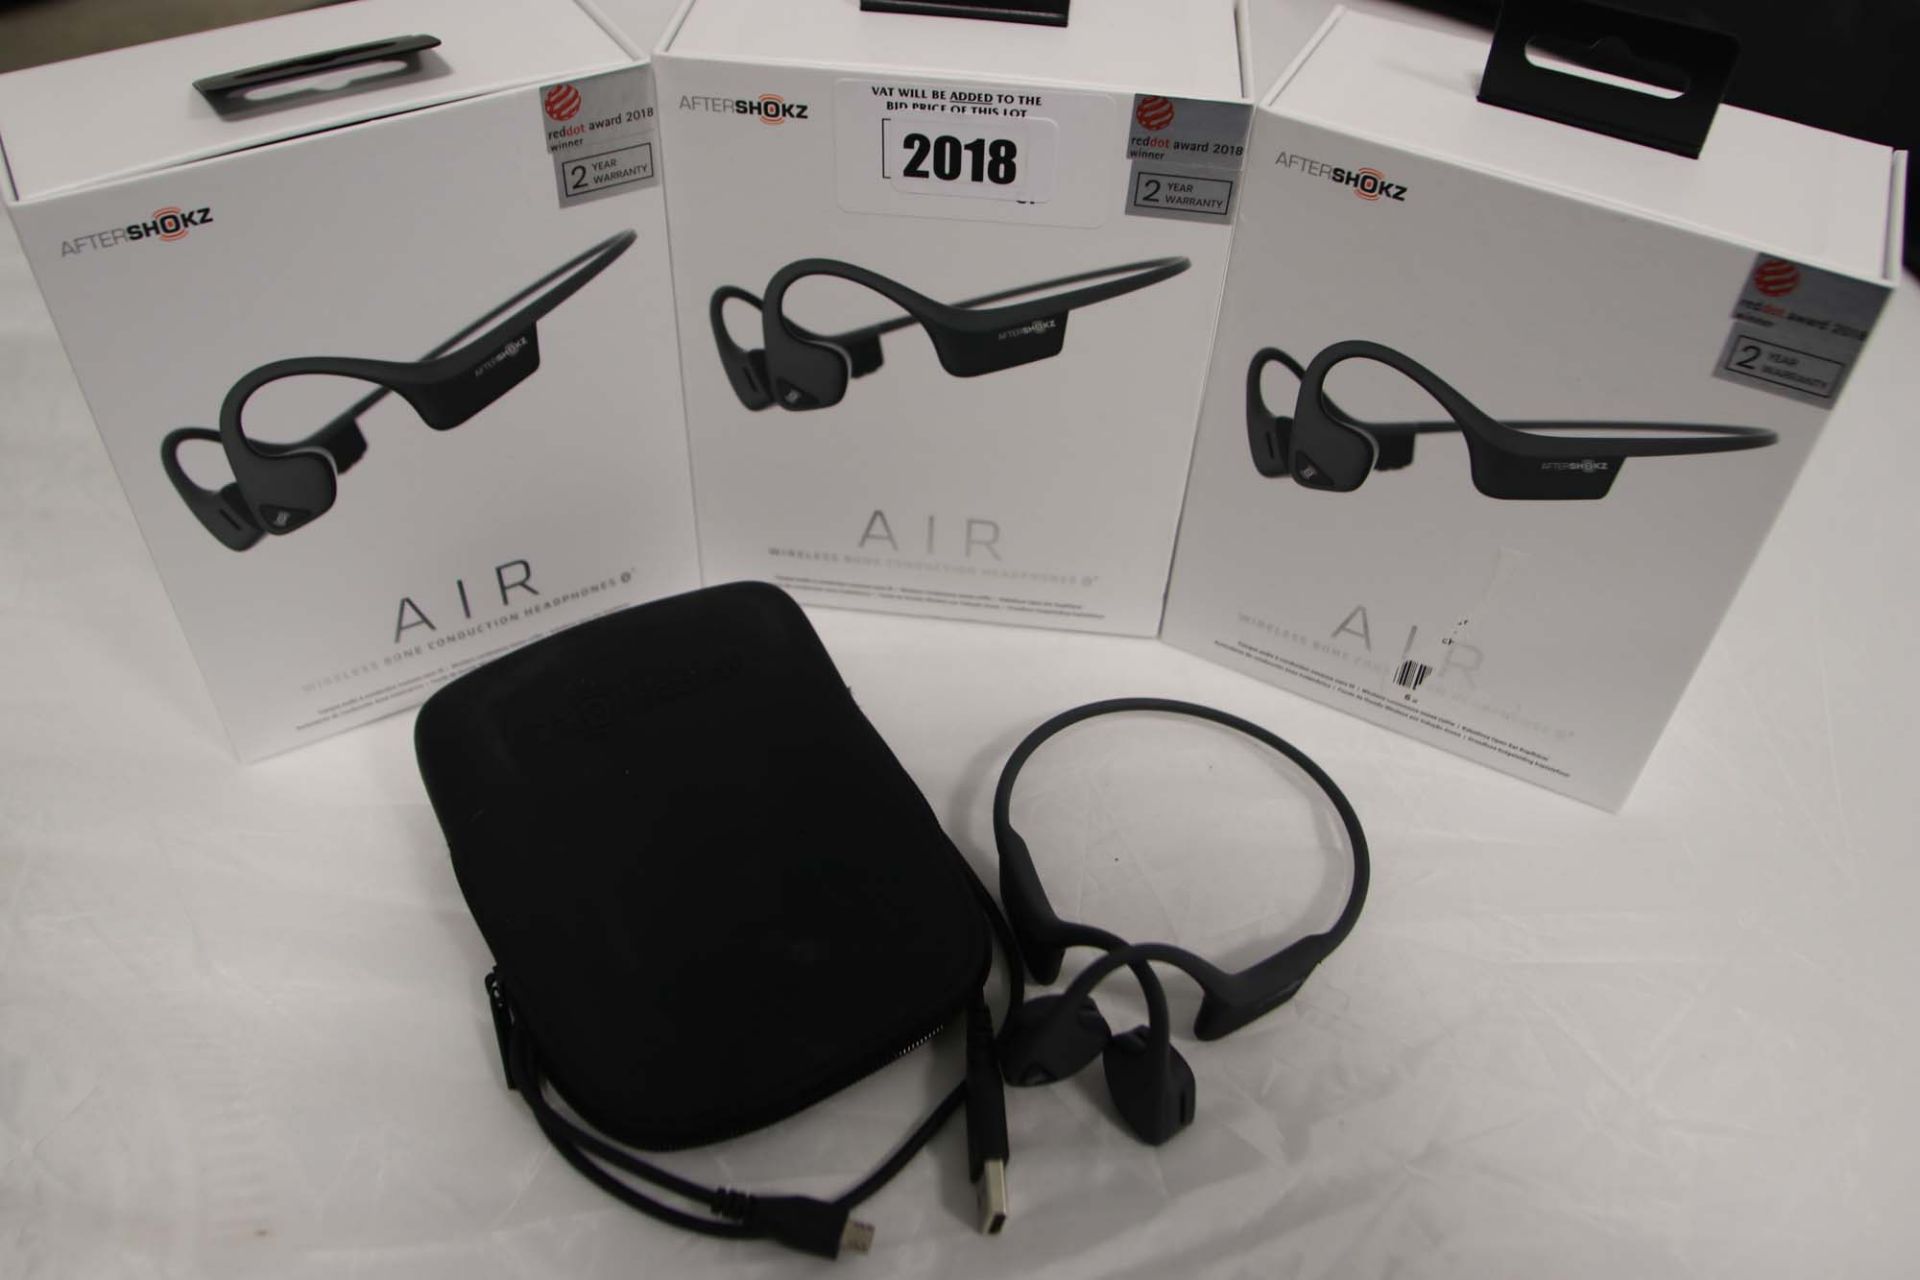 4 Aftershokz Air wireless bone conduction headphones